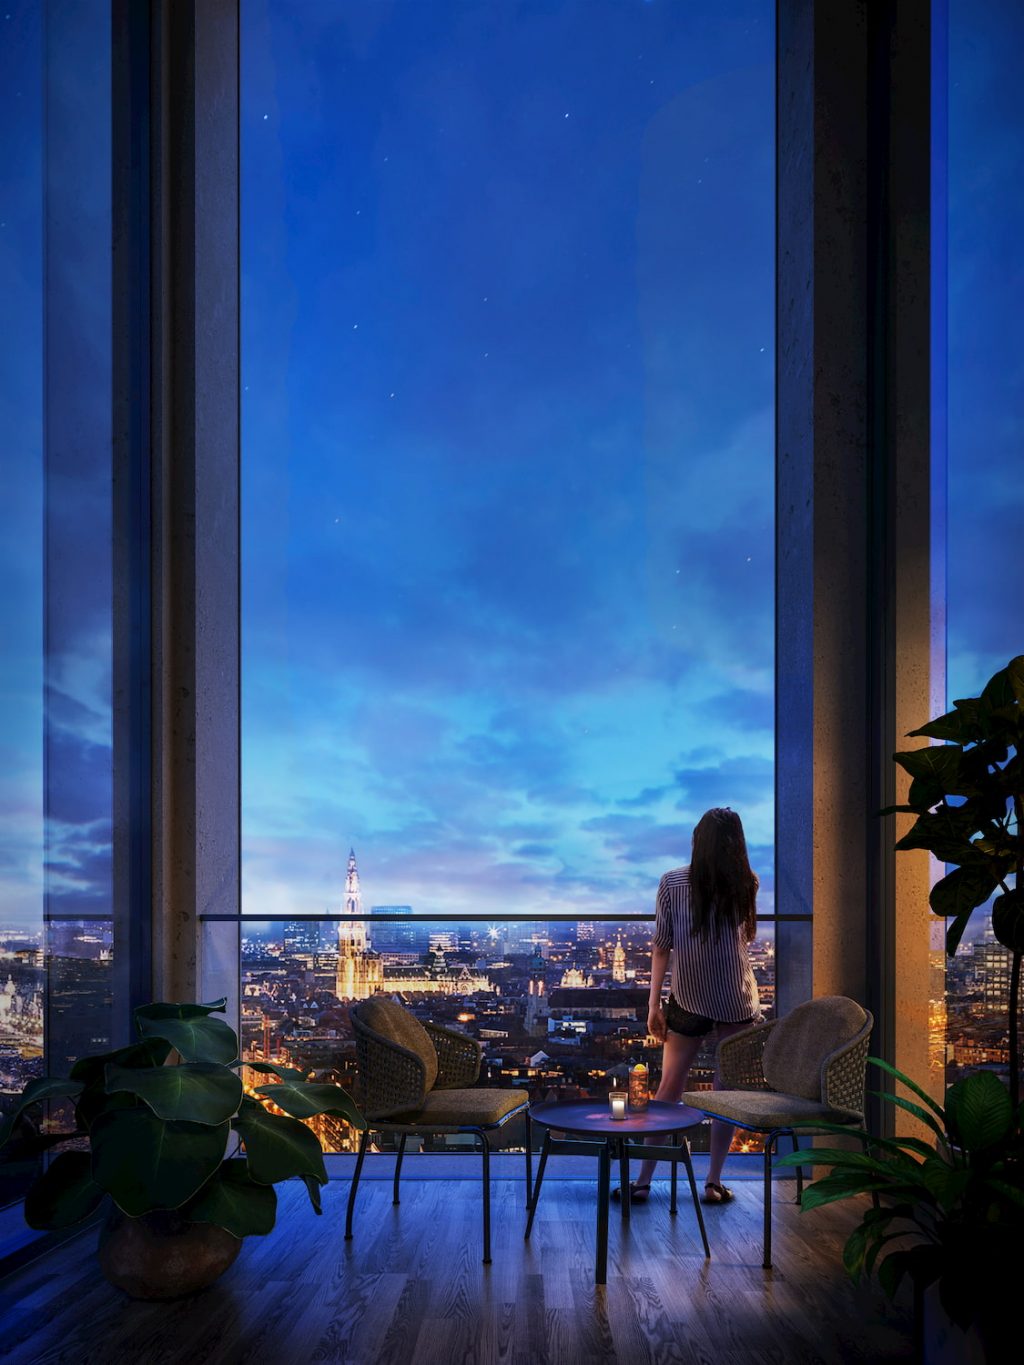 Spectacular bluish night view interior rendering glass window